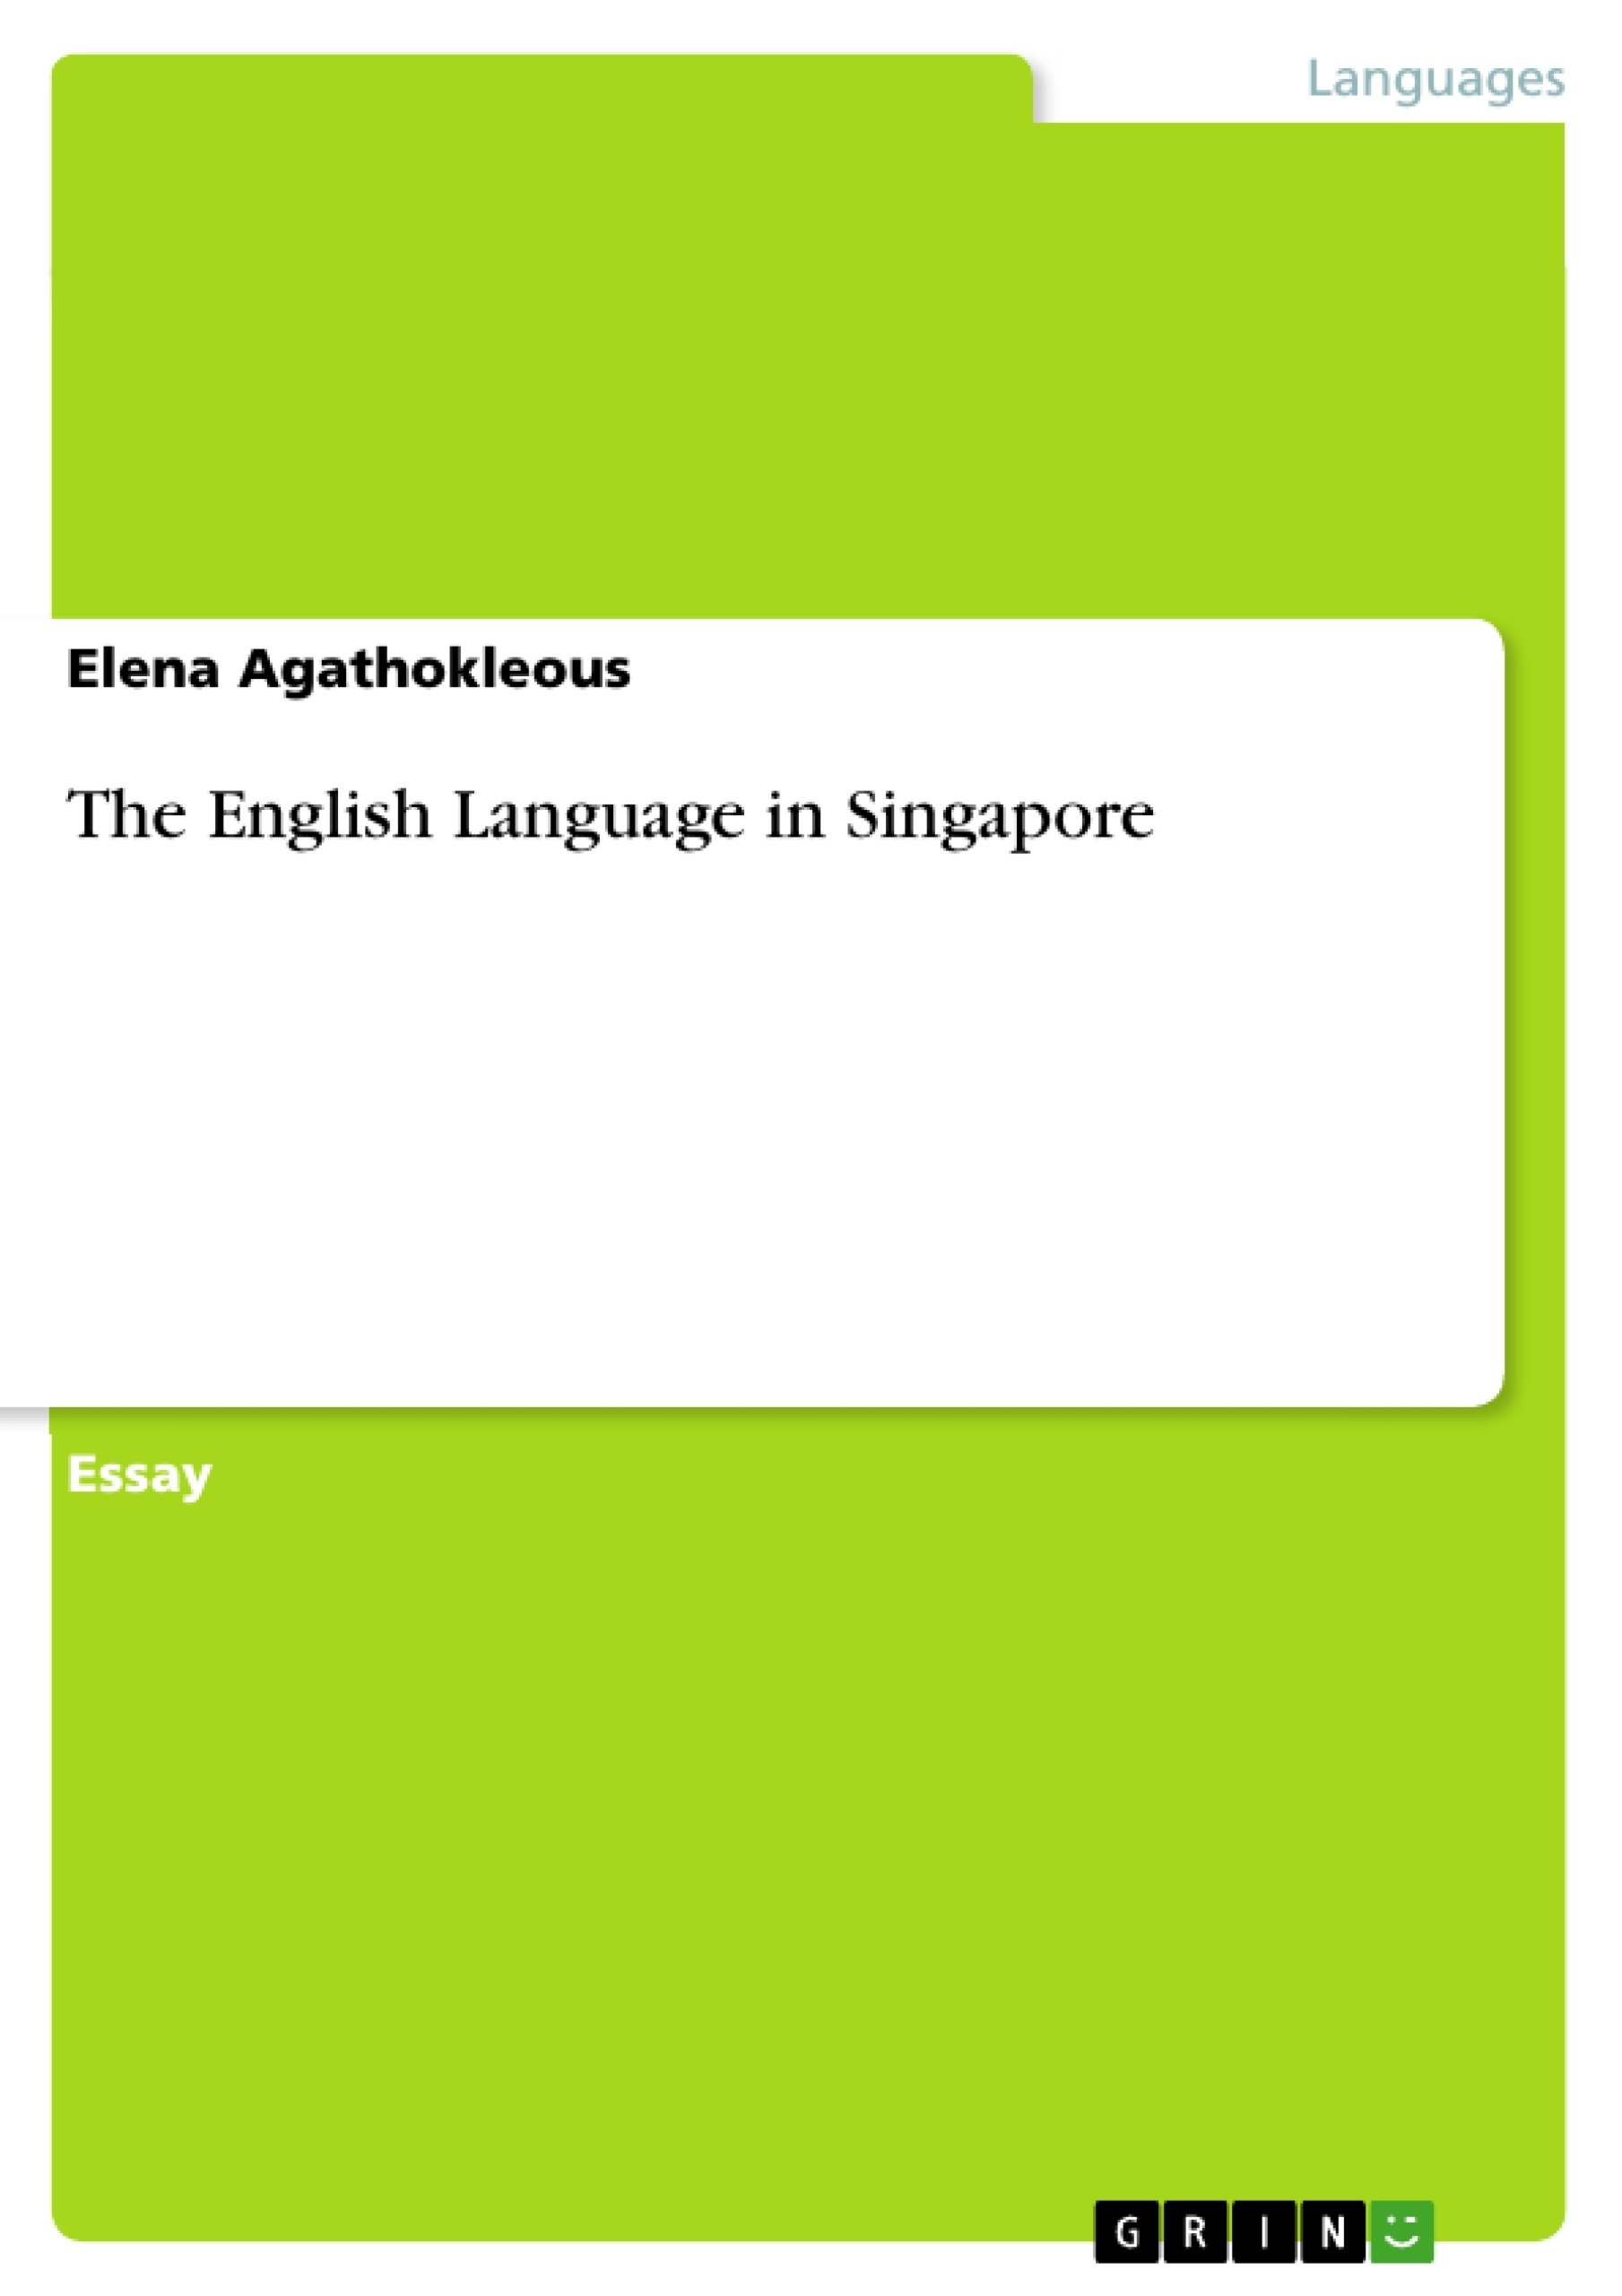 latin influence on english language pdf